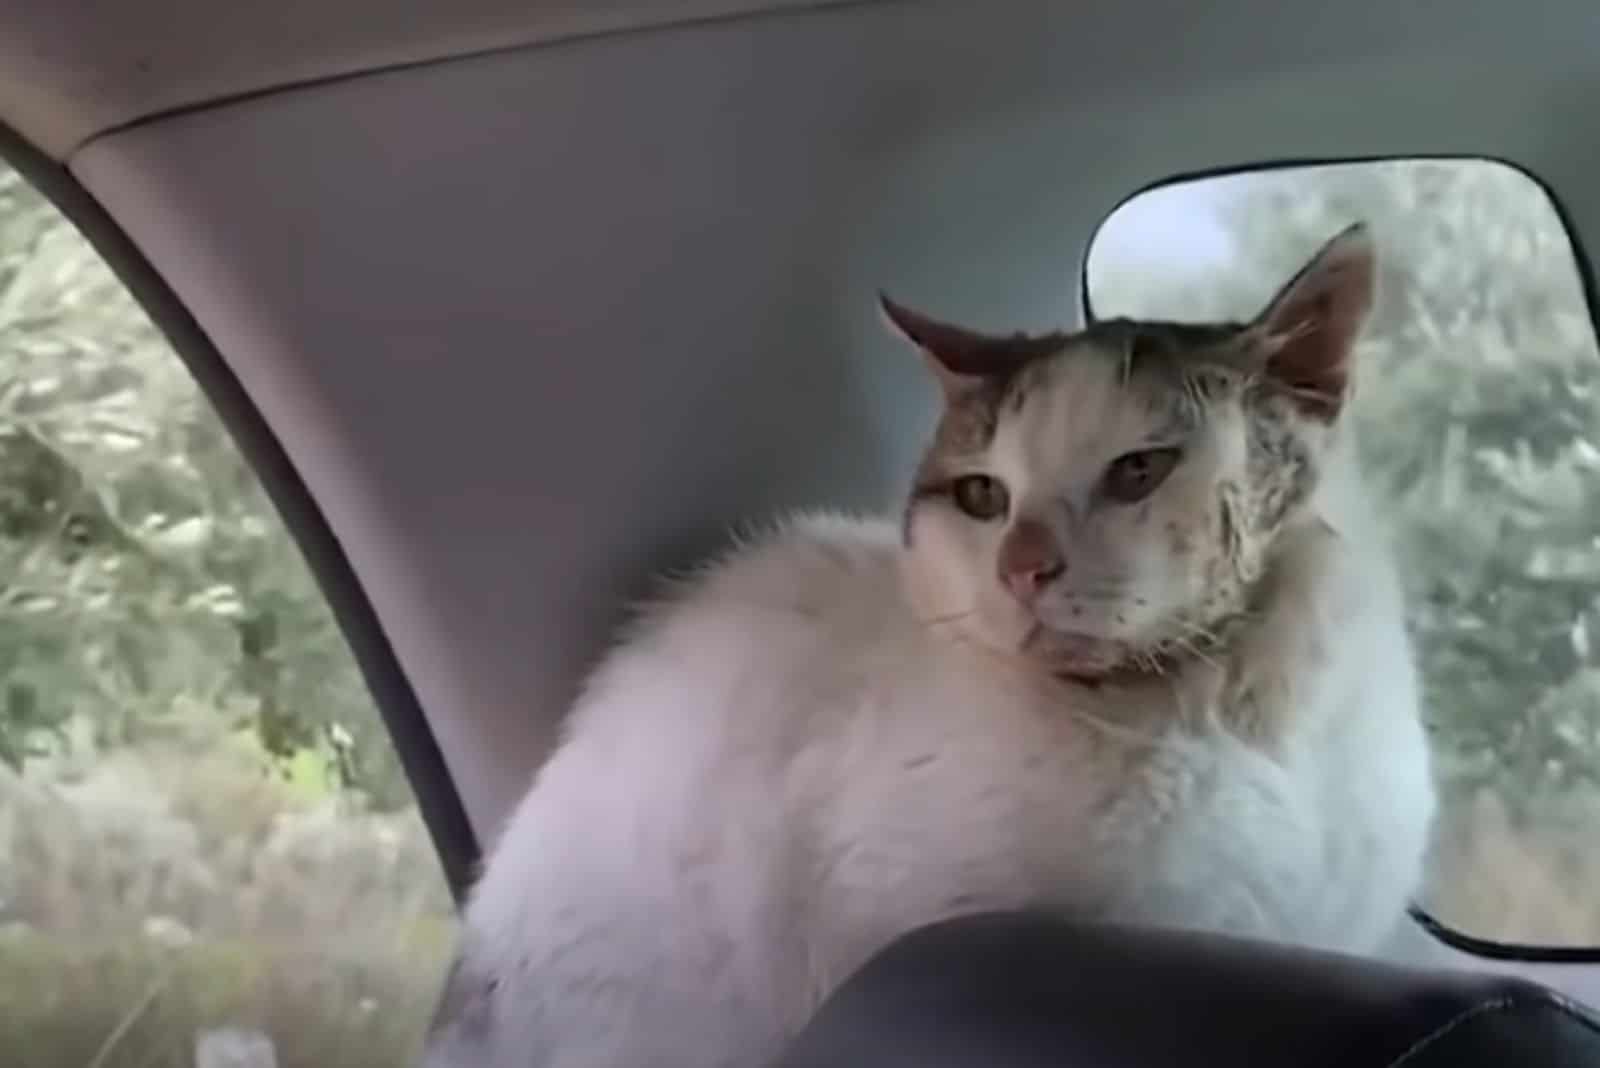 the cat enjoys the car